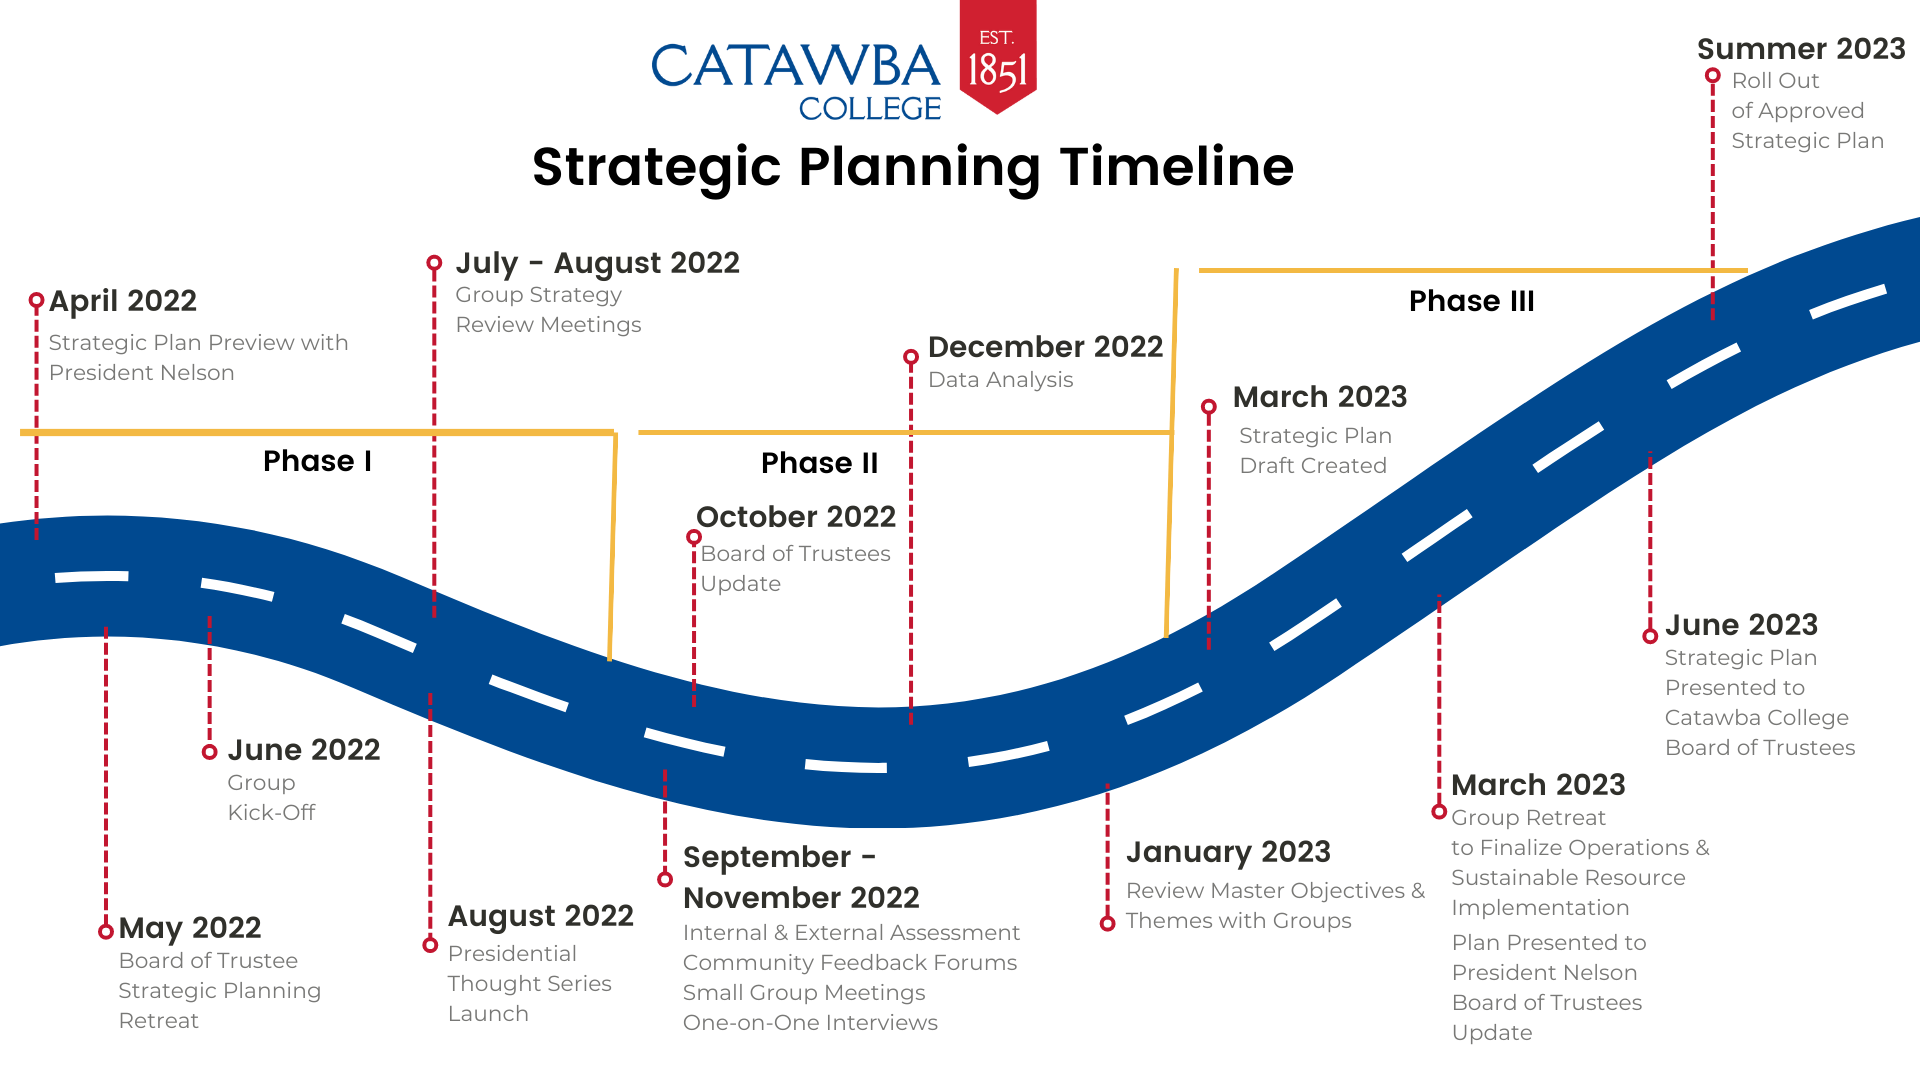 Timeline for Catawba College's Strategic Plan